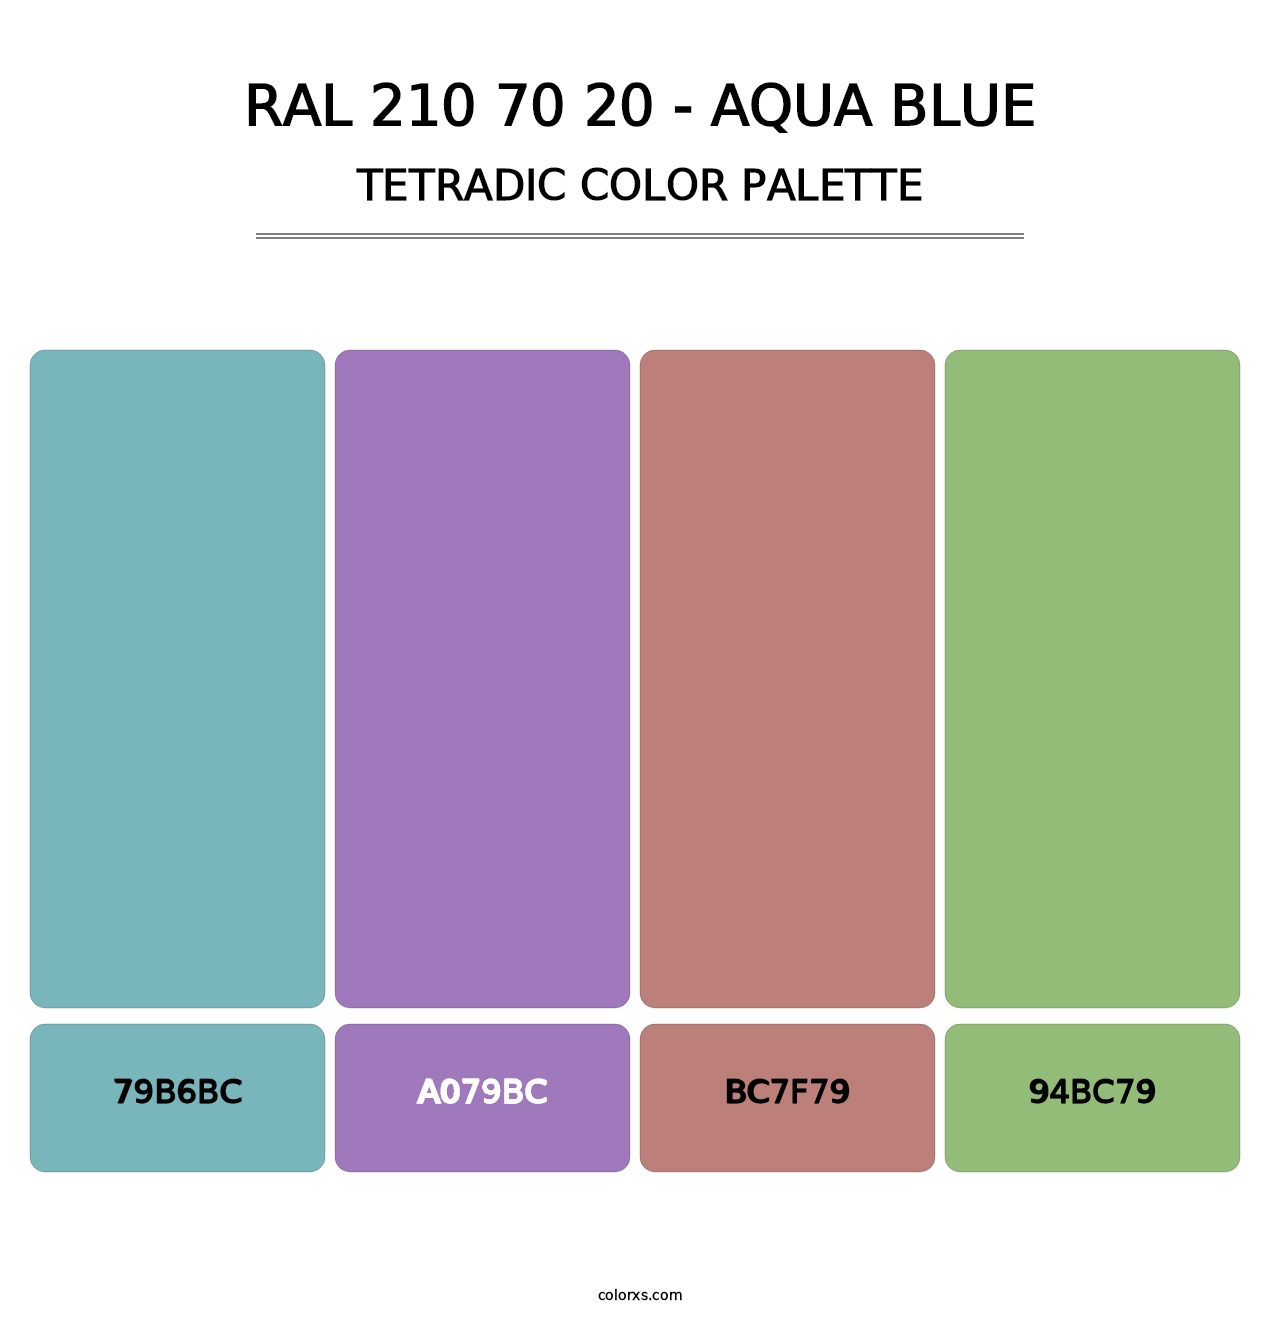 RAL 210 70 20 - Aqua Blue - Tetradic Color Palette